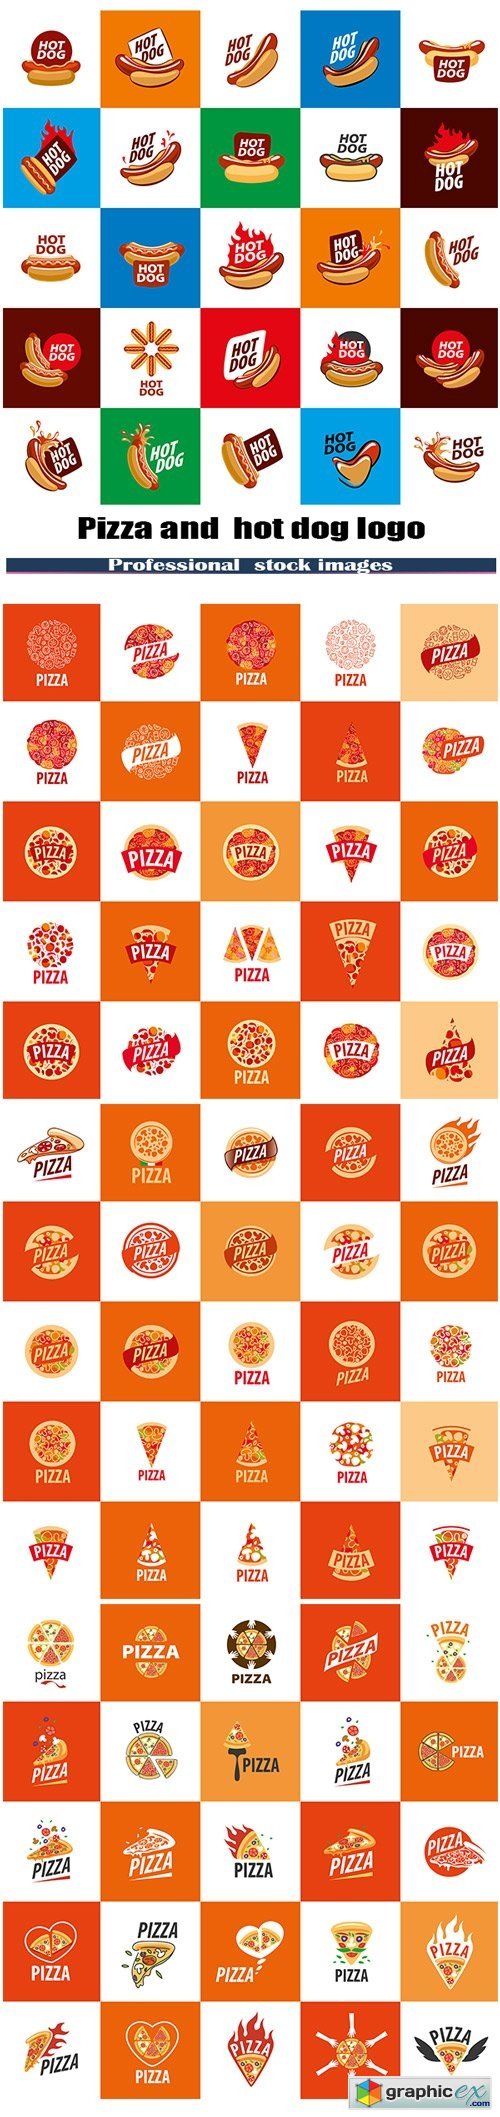 Pizza and hot dog logo